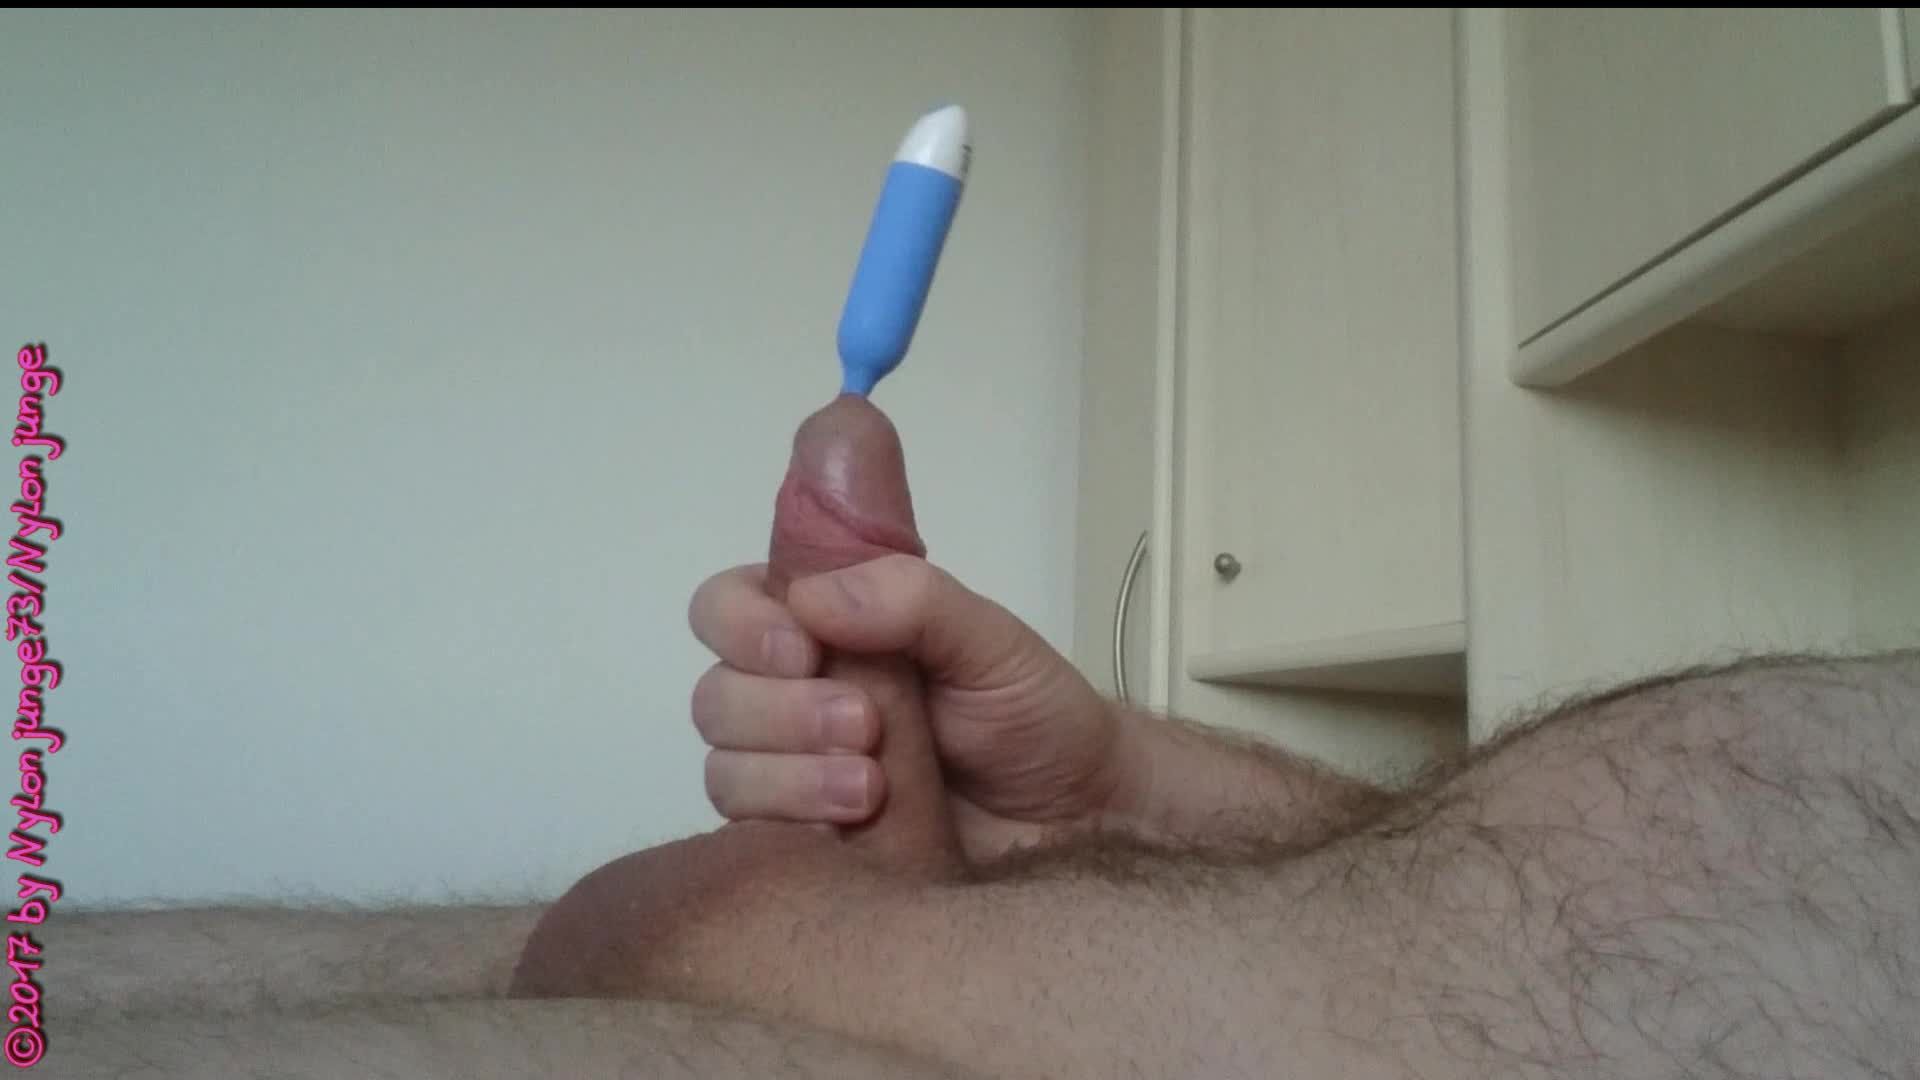 My urethral vibrator